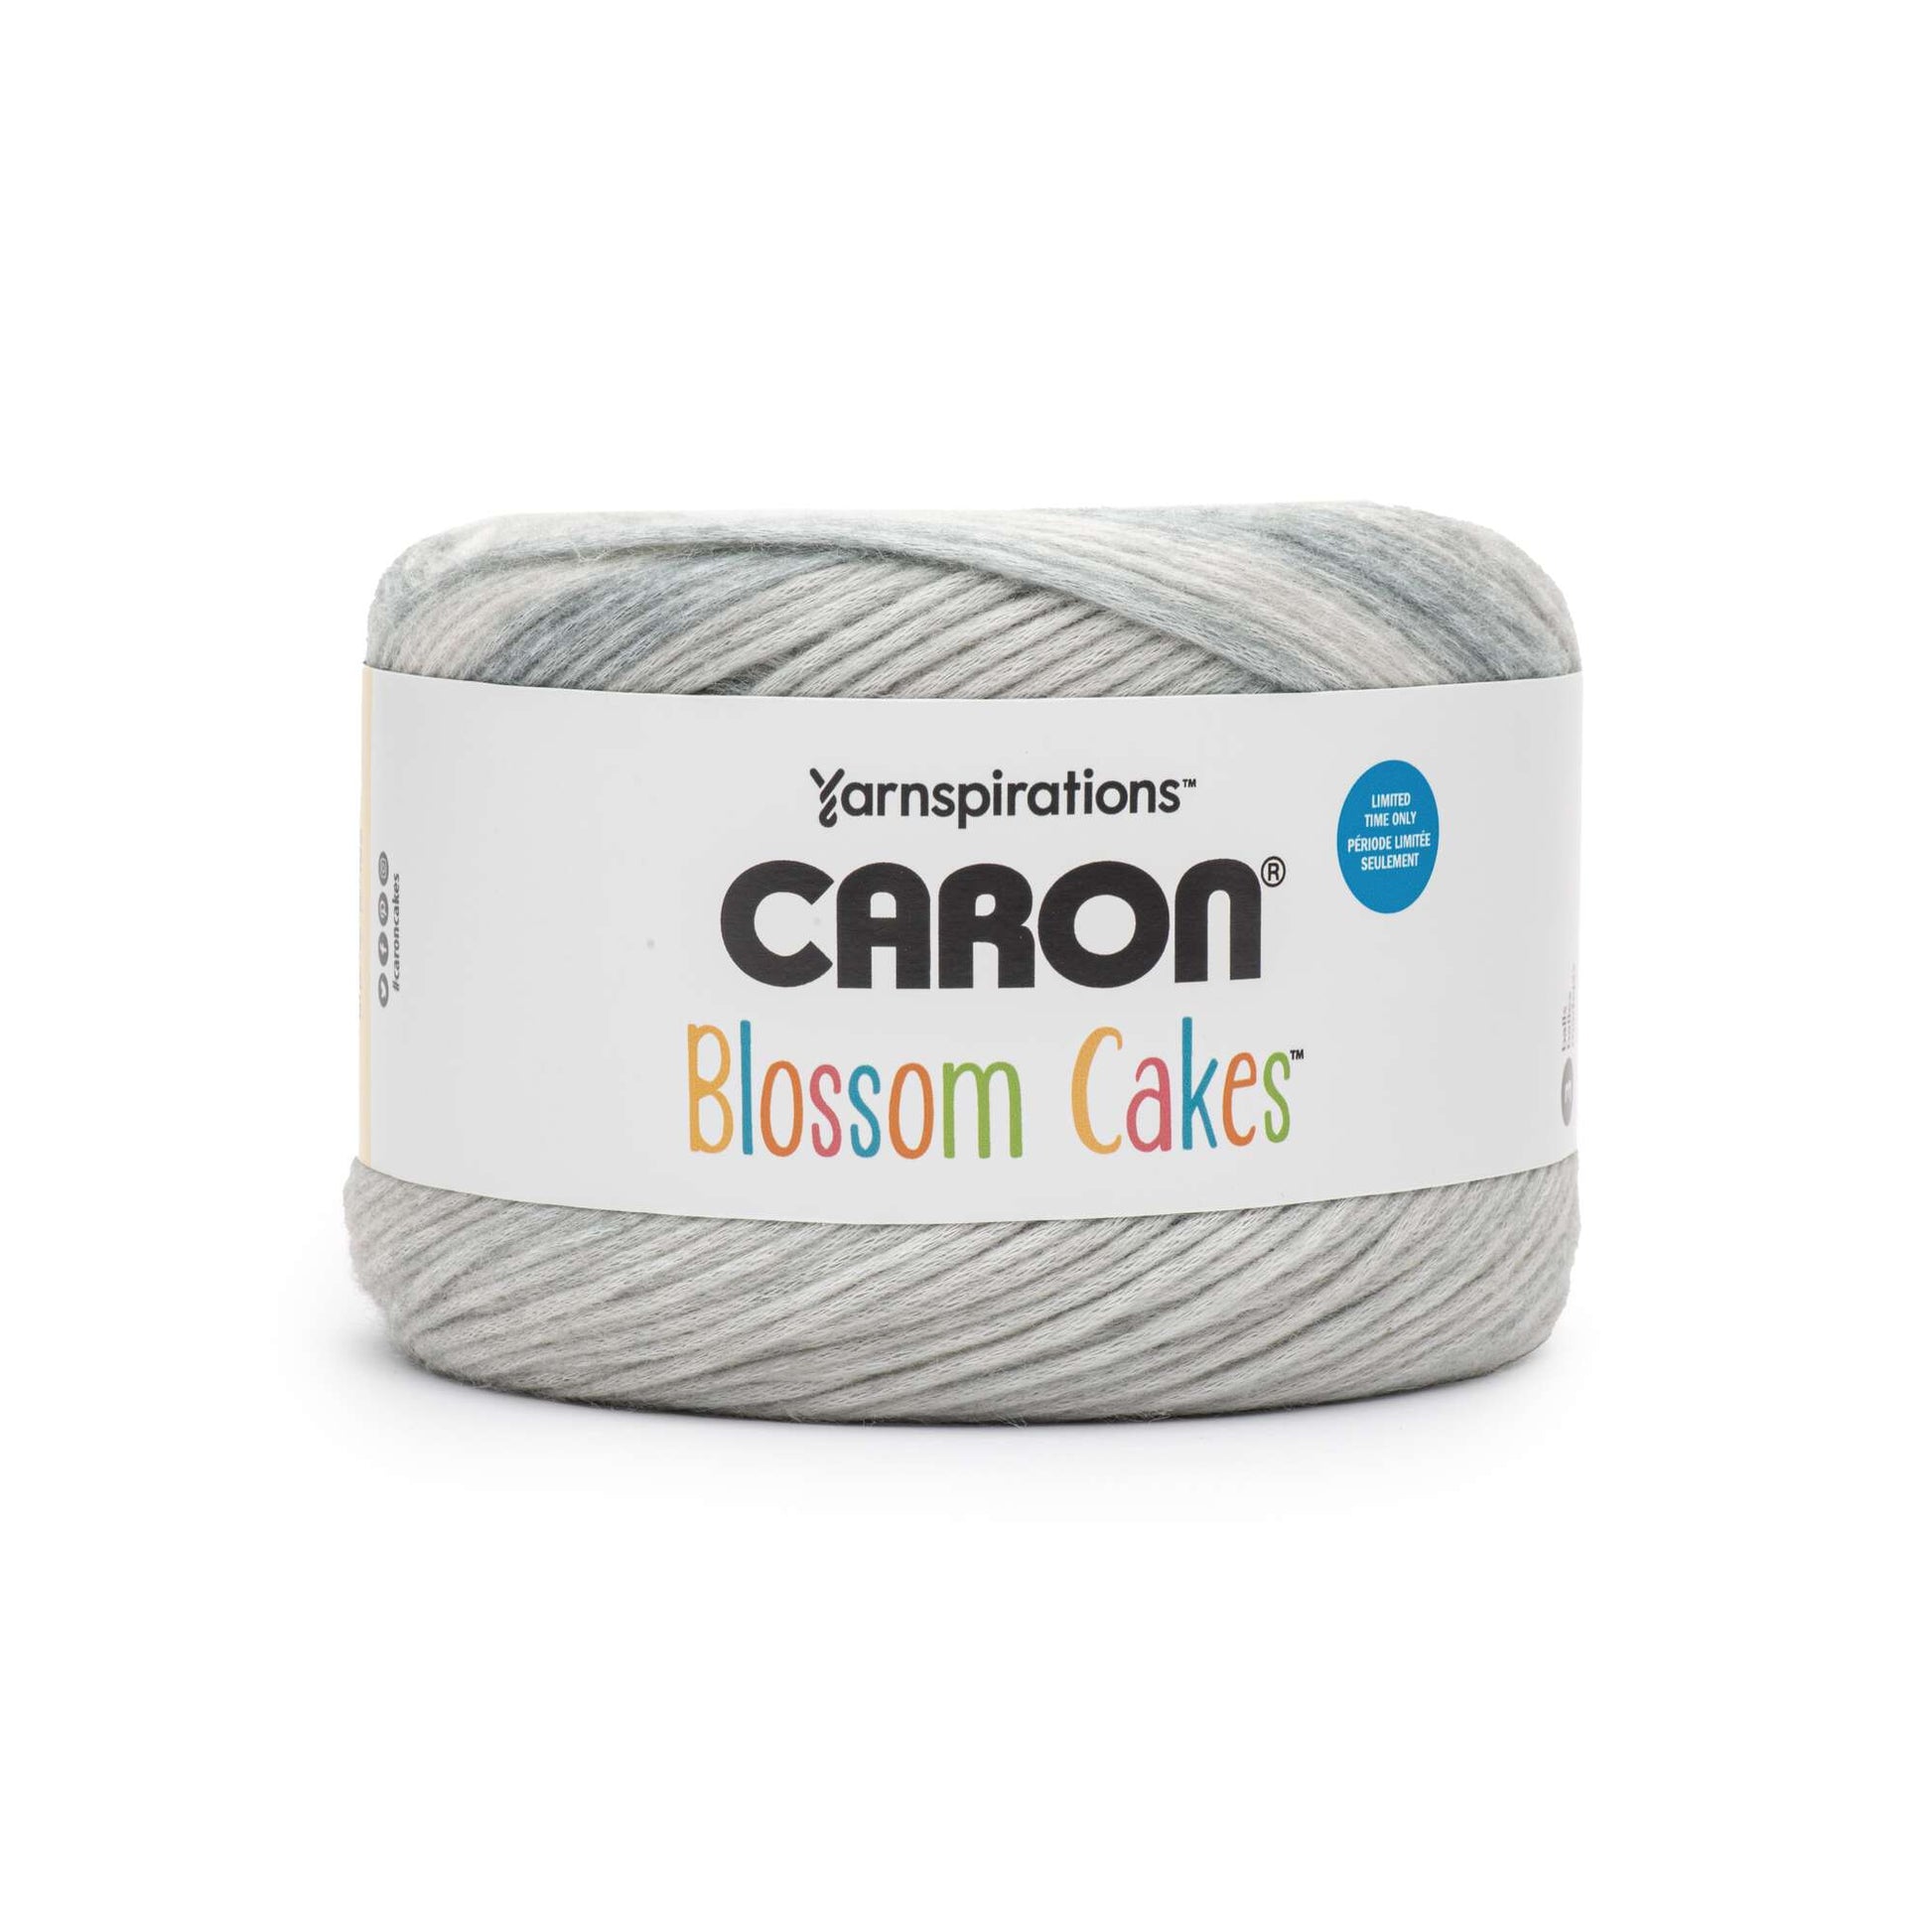 Caron Blossom Cakes Yarn - Retailer Exclusive